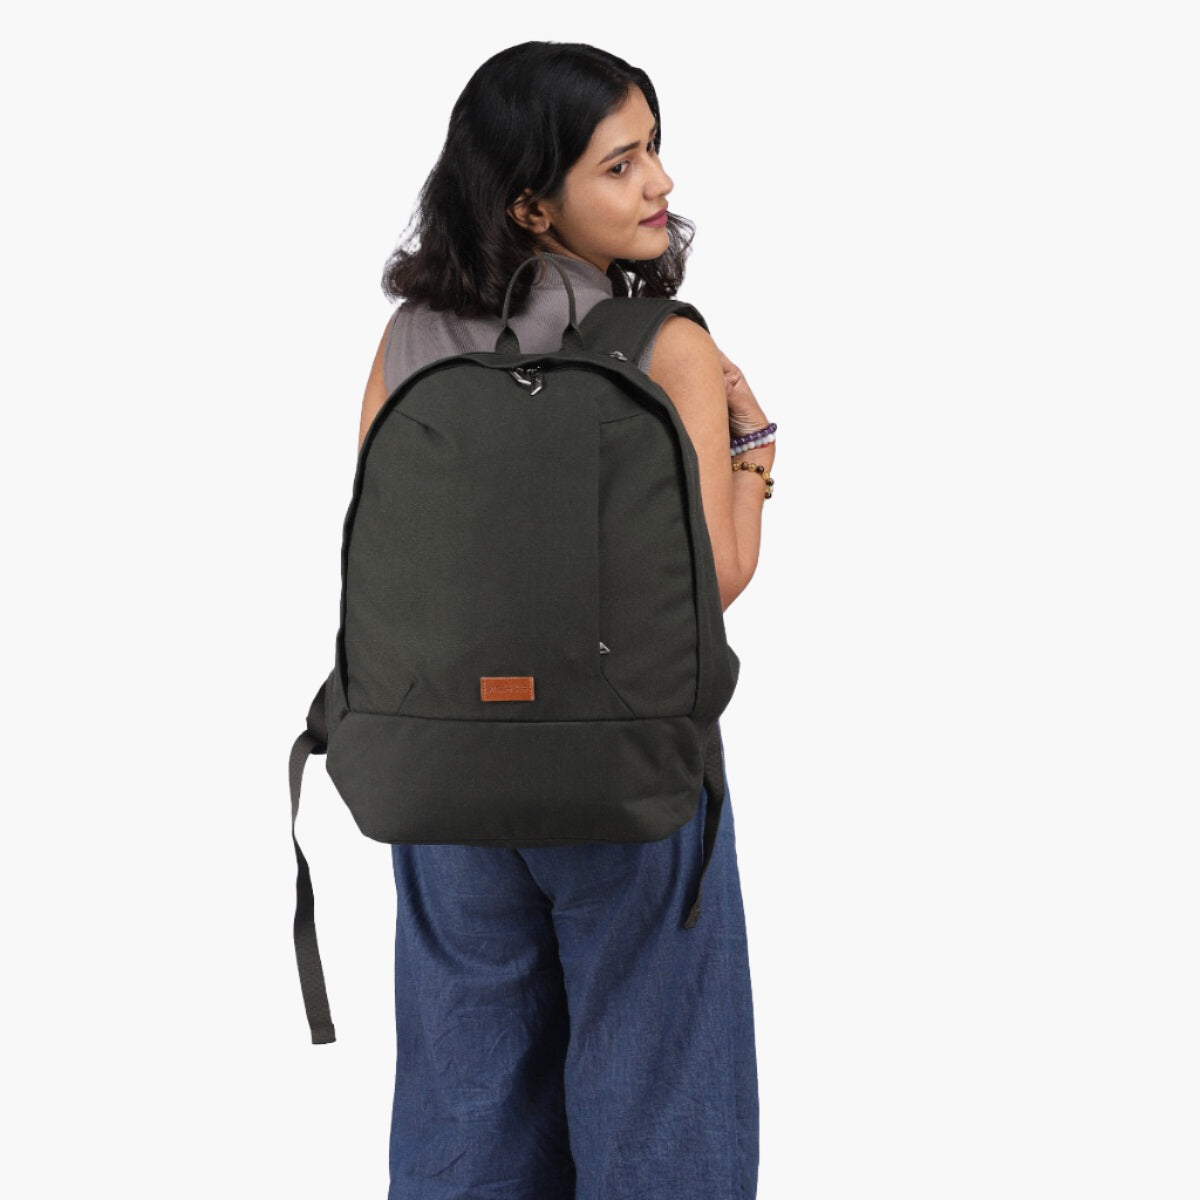 Green | Protecta Steady Progress Laptop Backpack - 6